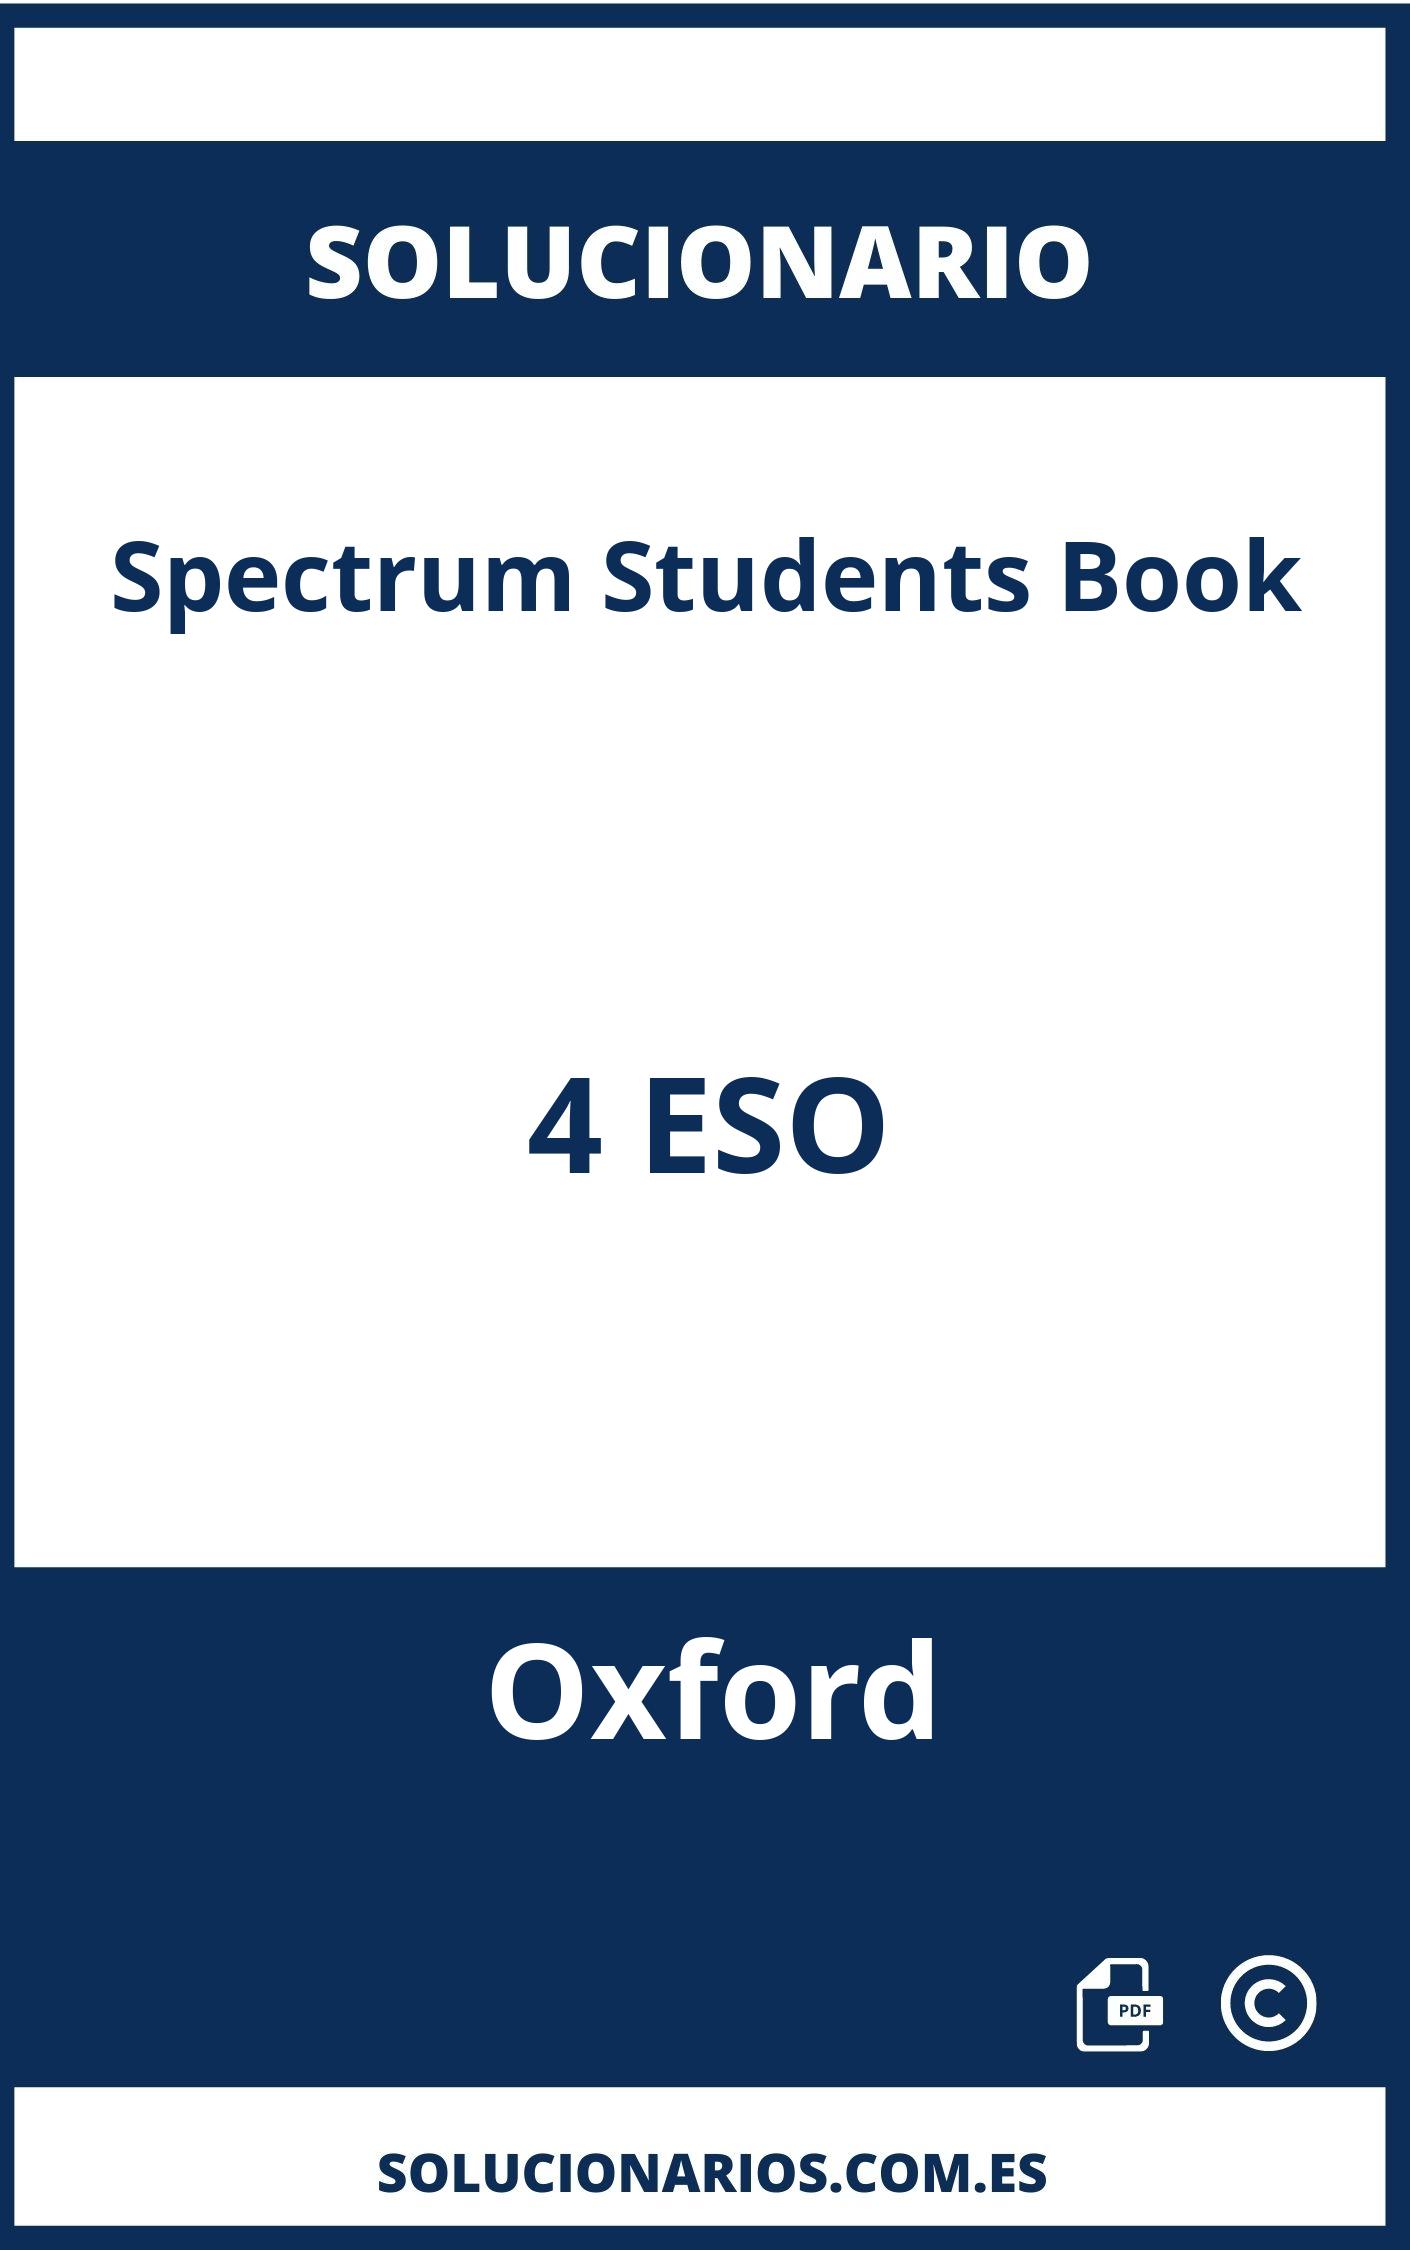 Solucionario Spectrum Students Book 4 ESO Oxford